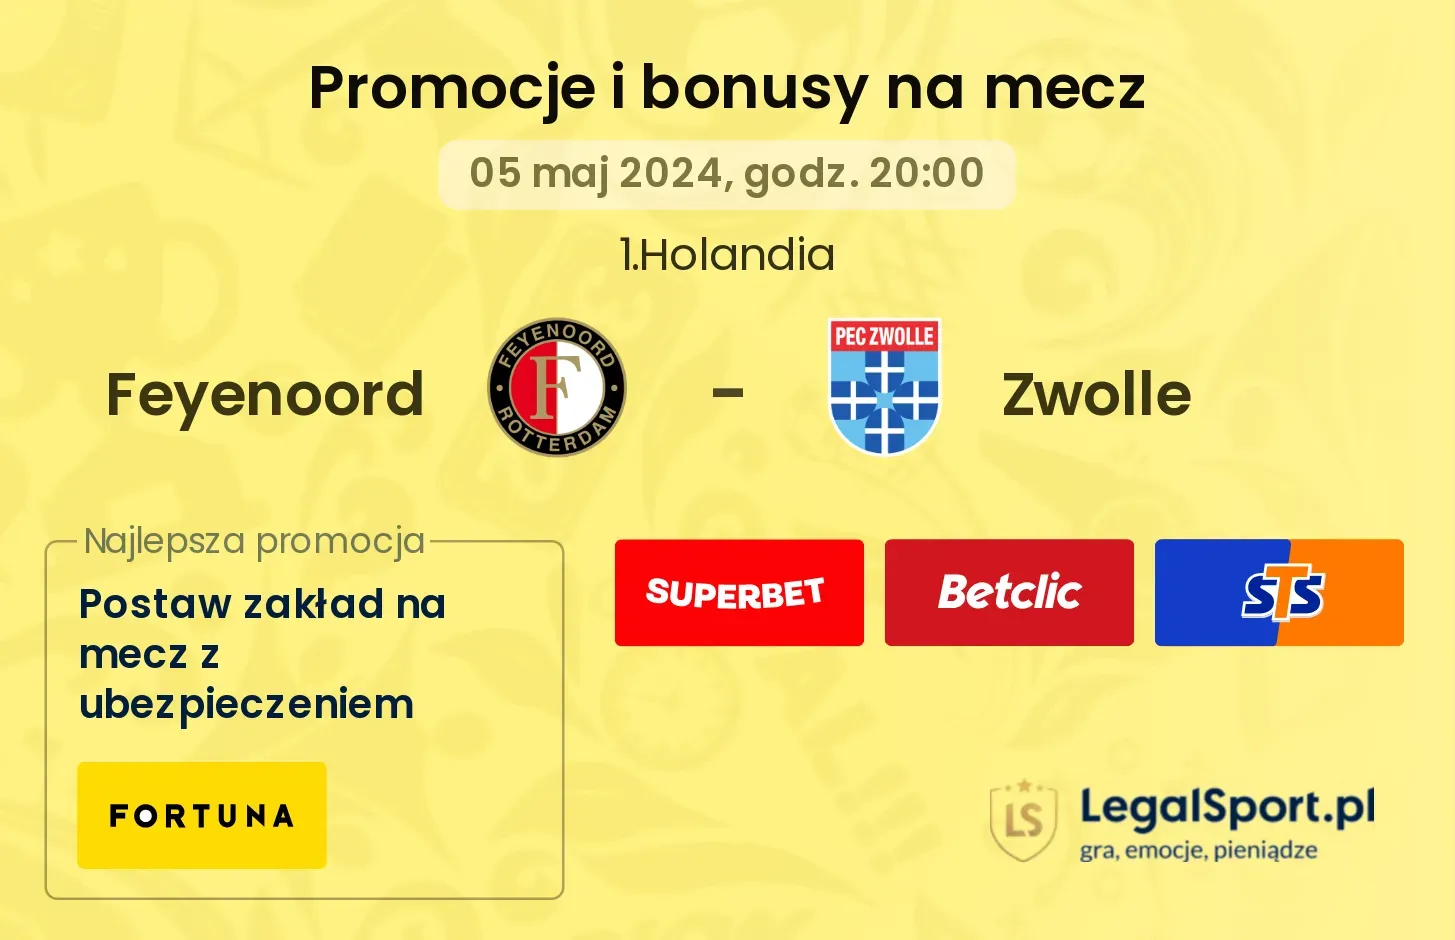 Feyenoord - Zwolle promocje bonusy na mecz